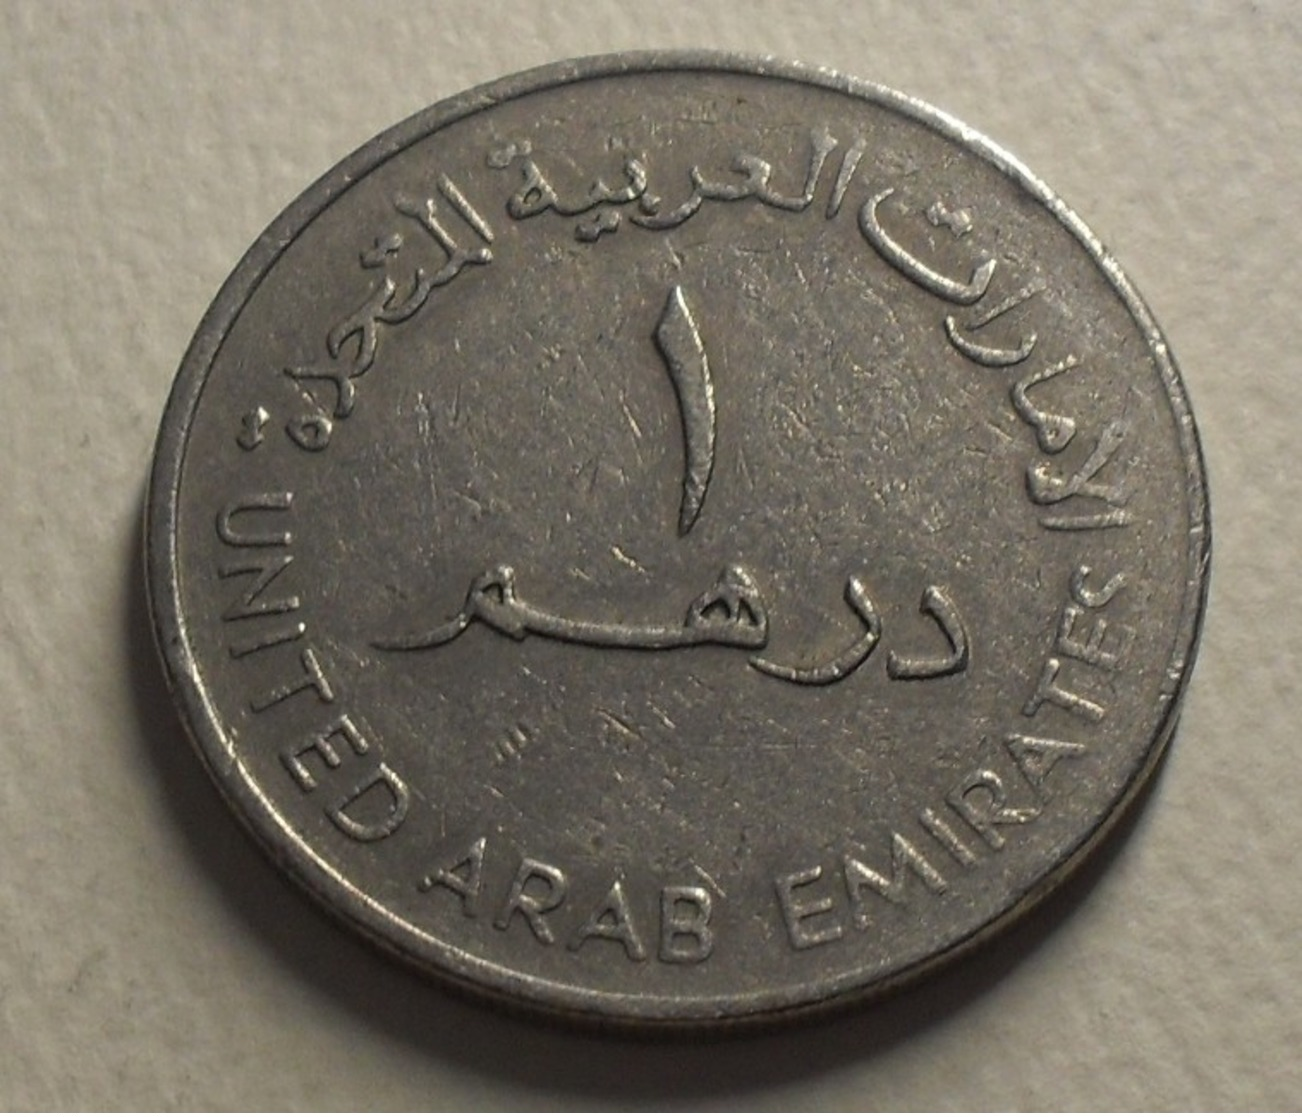 1973 - Emirats Arabes Unis - United Arab Emirates - 1 DIRHAM - 1393 - Sultan Zayeb Bin, Grand Module - KM 6.1 - Emirats Arabes Unis